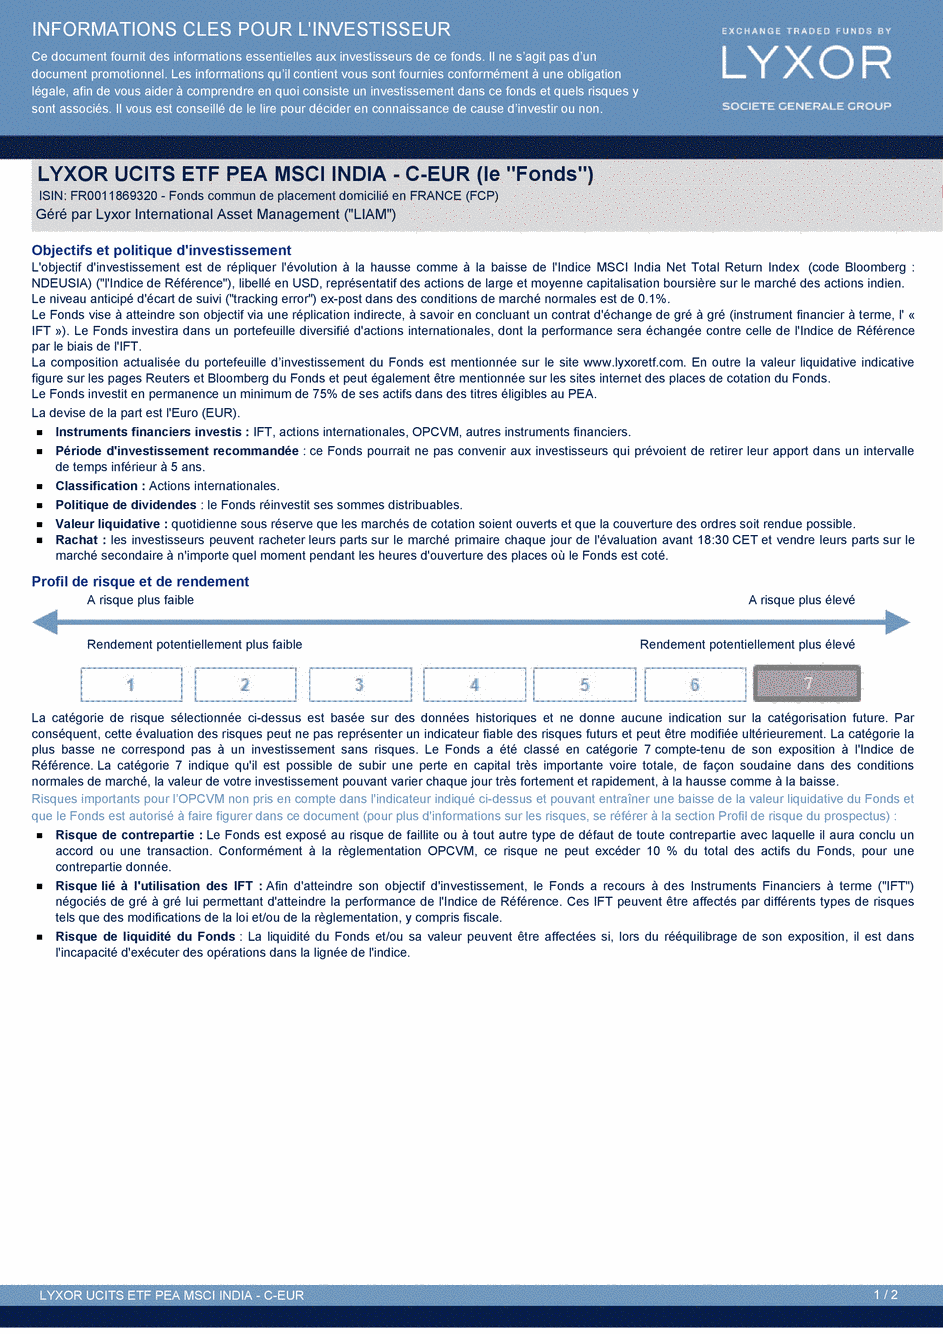 DICI Lyxor PEA Inde (MSCI India) UCITS ETF - Capi. - 13/05/2014 - French